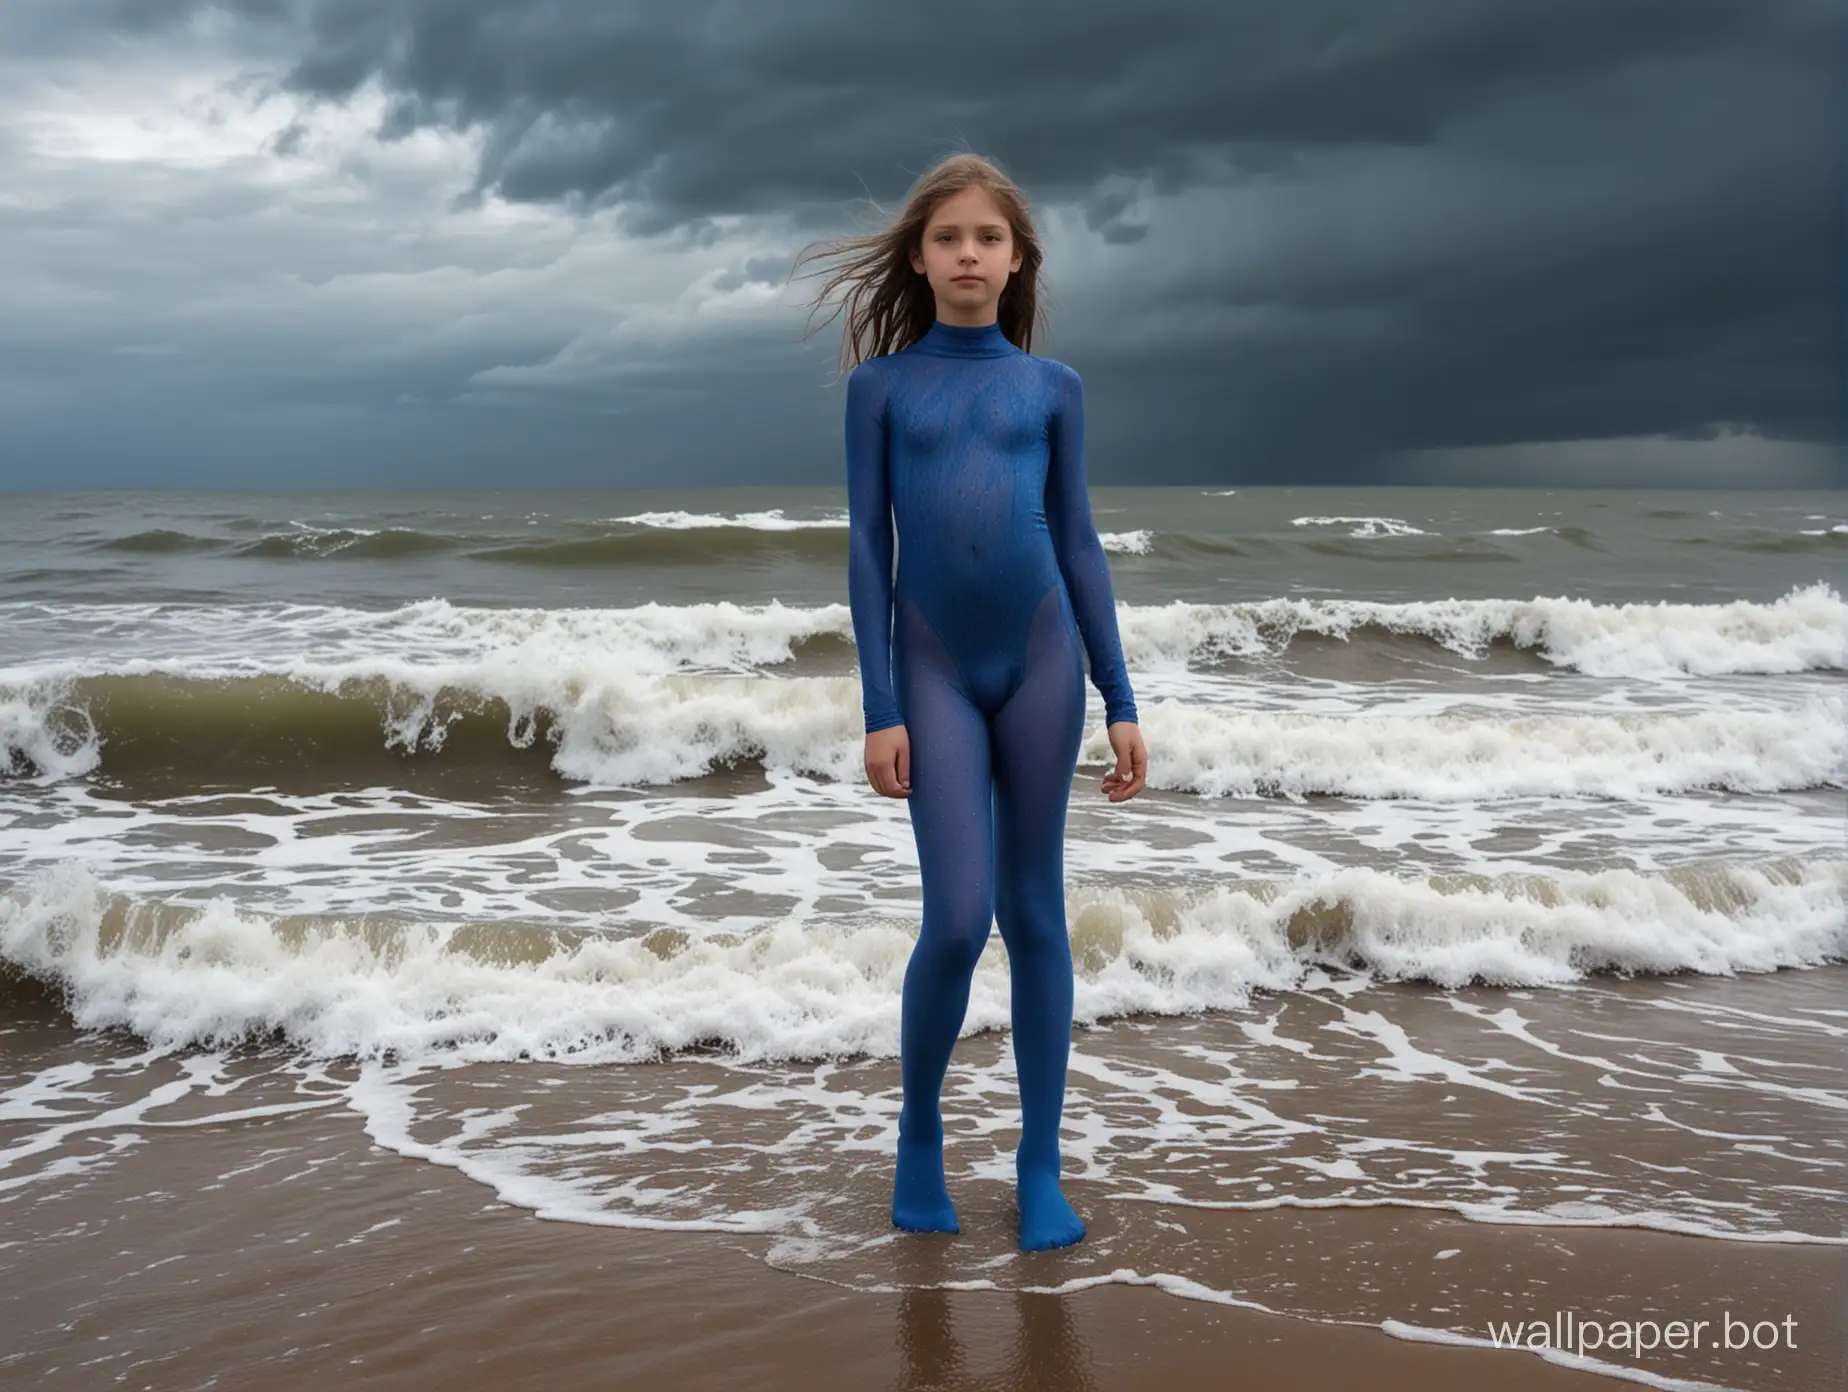 Girl-in-Blue-Bodystocking-by-Raging-Sea-under-Stormy-Sky